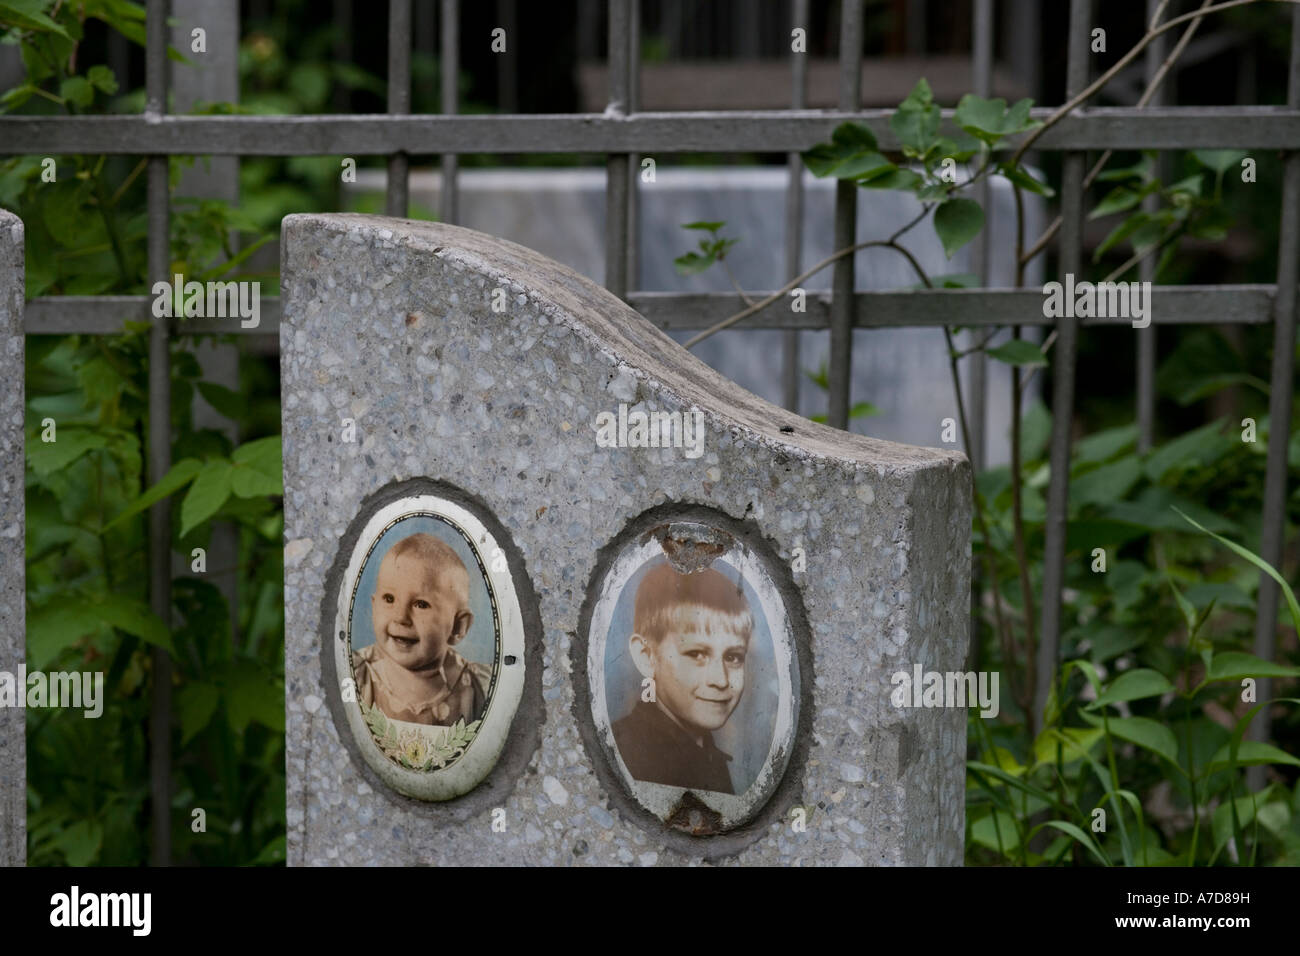 Two enameled portrait photos on headstone of children's grave in graveyard Almaty Kazakhstan Stock Photo